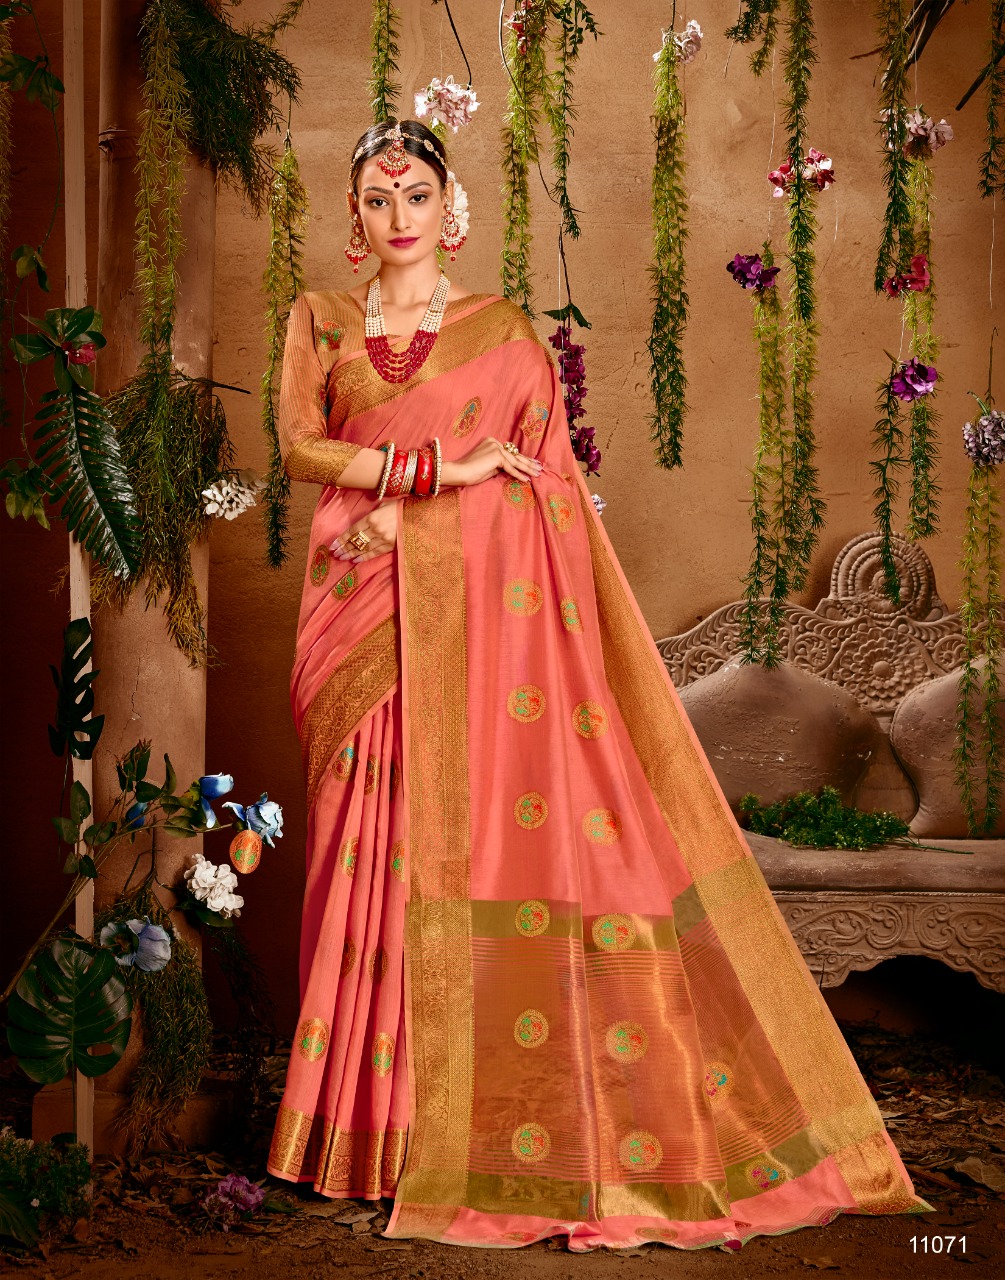 shakunt jailekha 2 cotton authentic fabric saree catalog